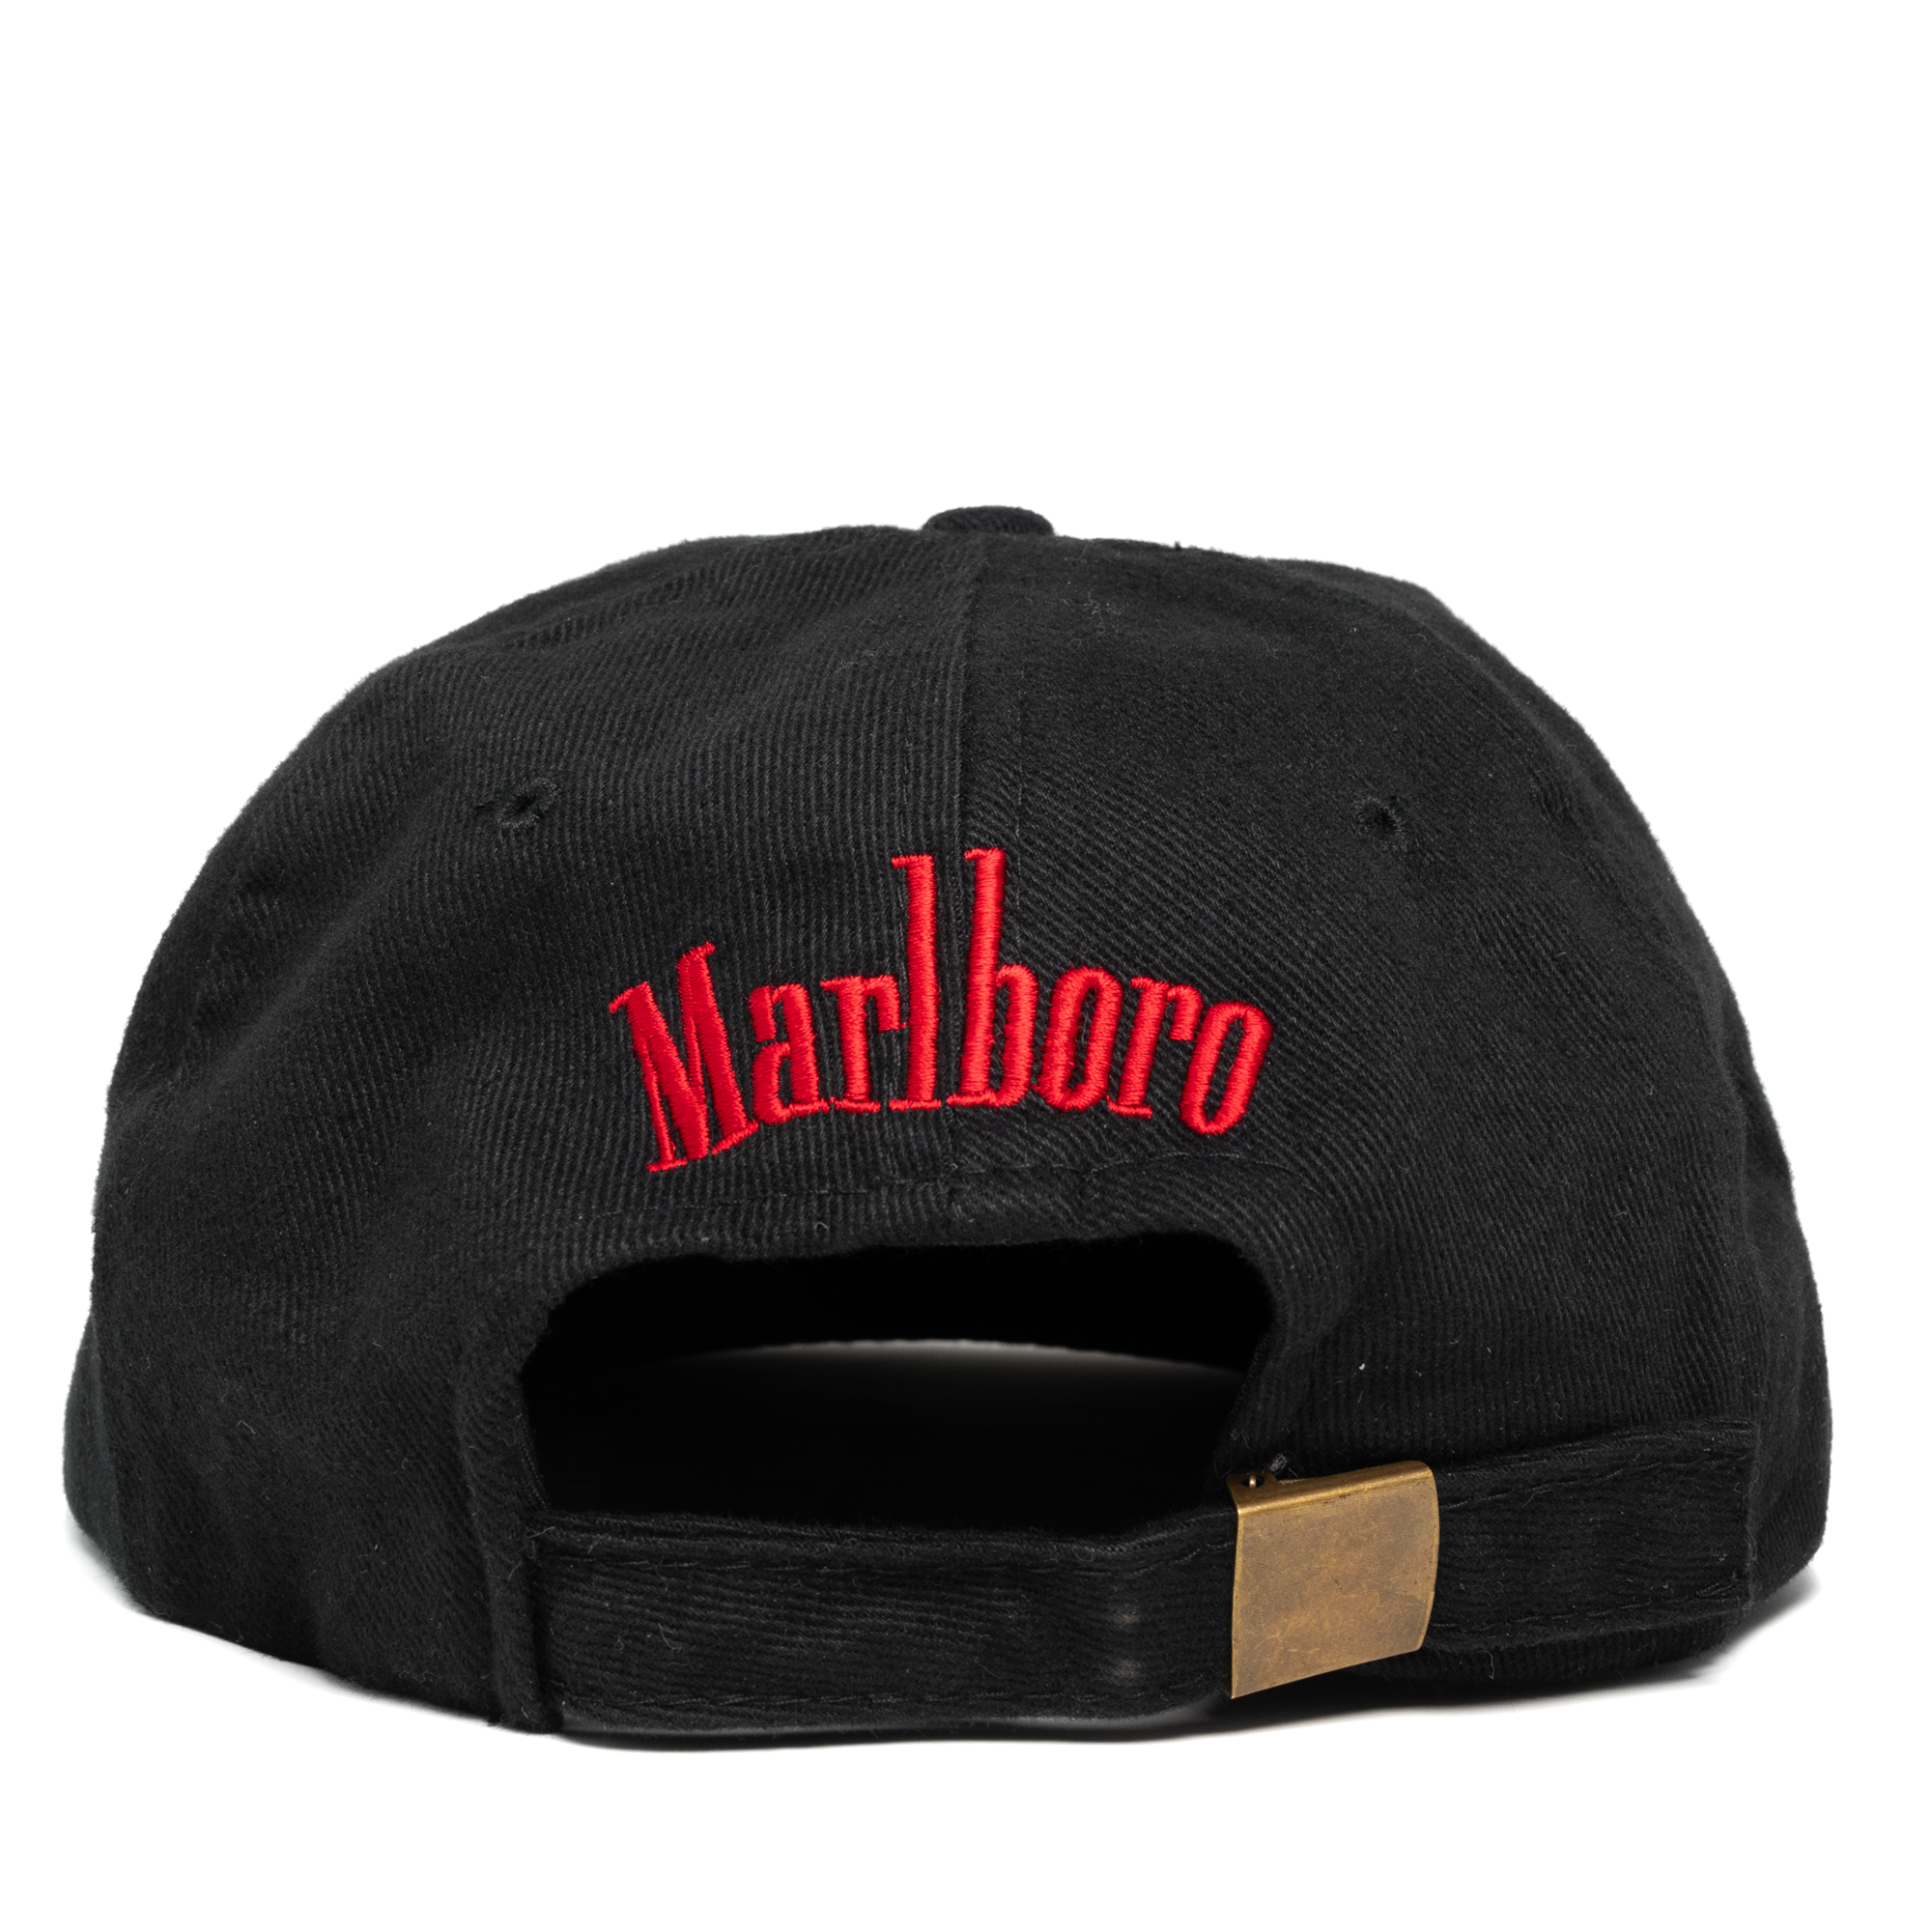 Marlboro Cigarettes Vanguard Strapback Black-PLUS